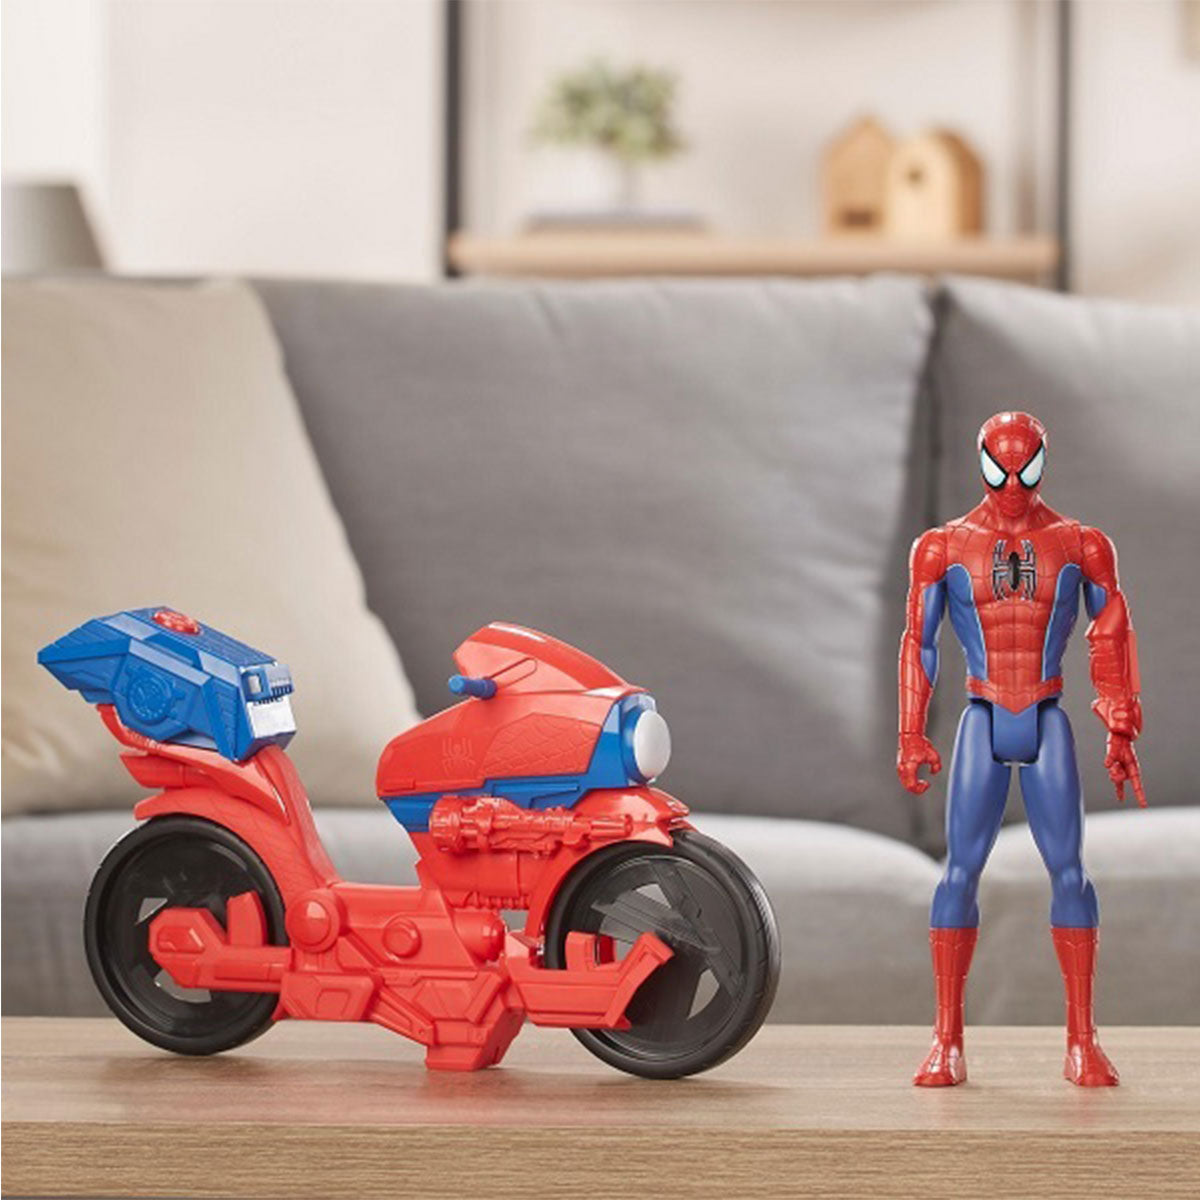 Spider-Man bike  Motorcycle paint jobs, Super bikes, Man bike